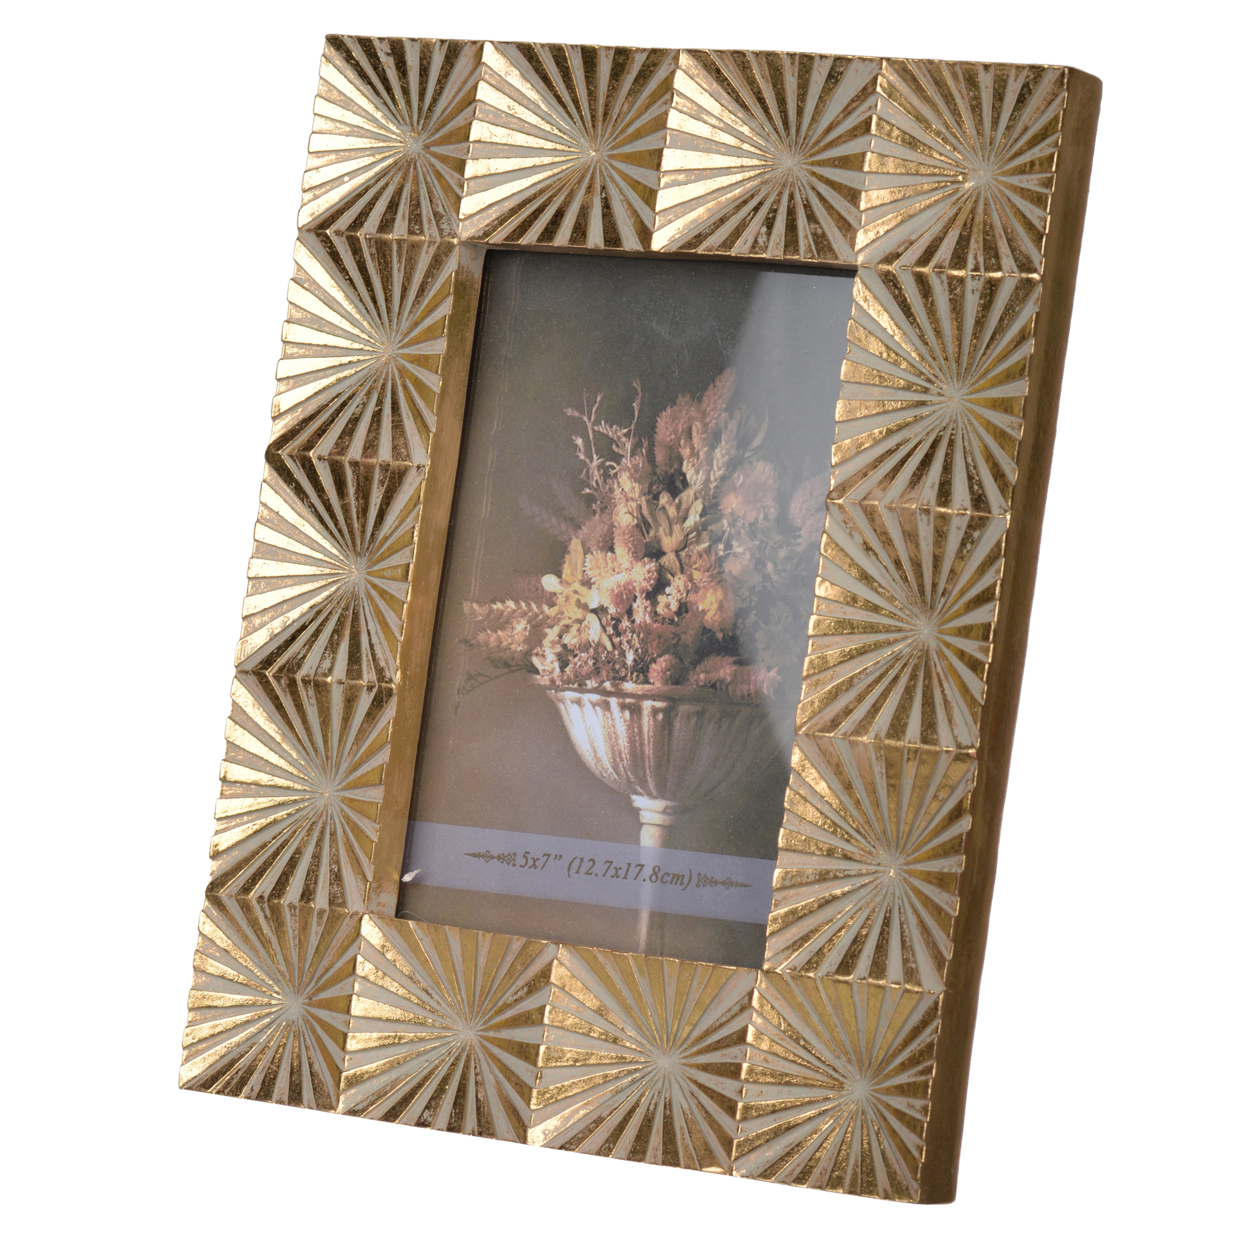 Rectangular Shaped Polyresin Photo Frame With Mirror And Pyramid Like Design , Gold- Saltoro Sherpi